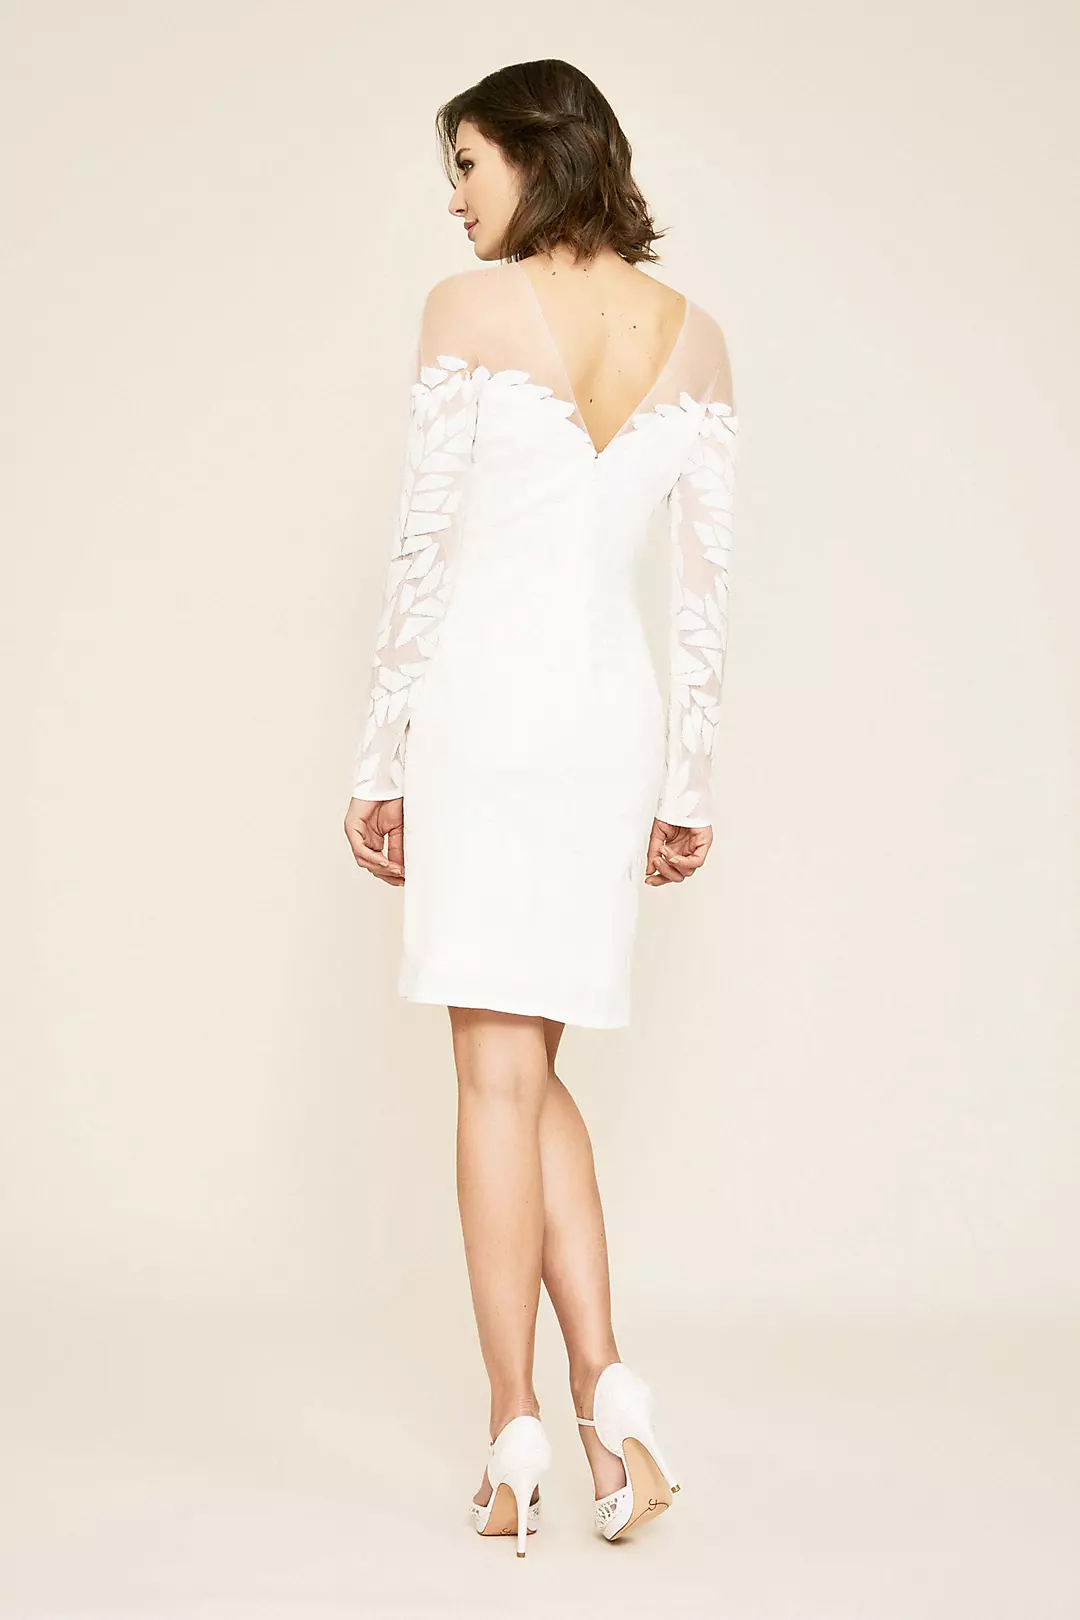 Short Sequin Lace Motif Long Sleeve Wedding Dress Image 2